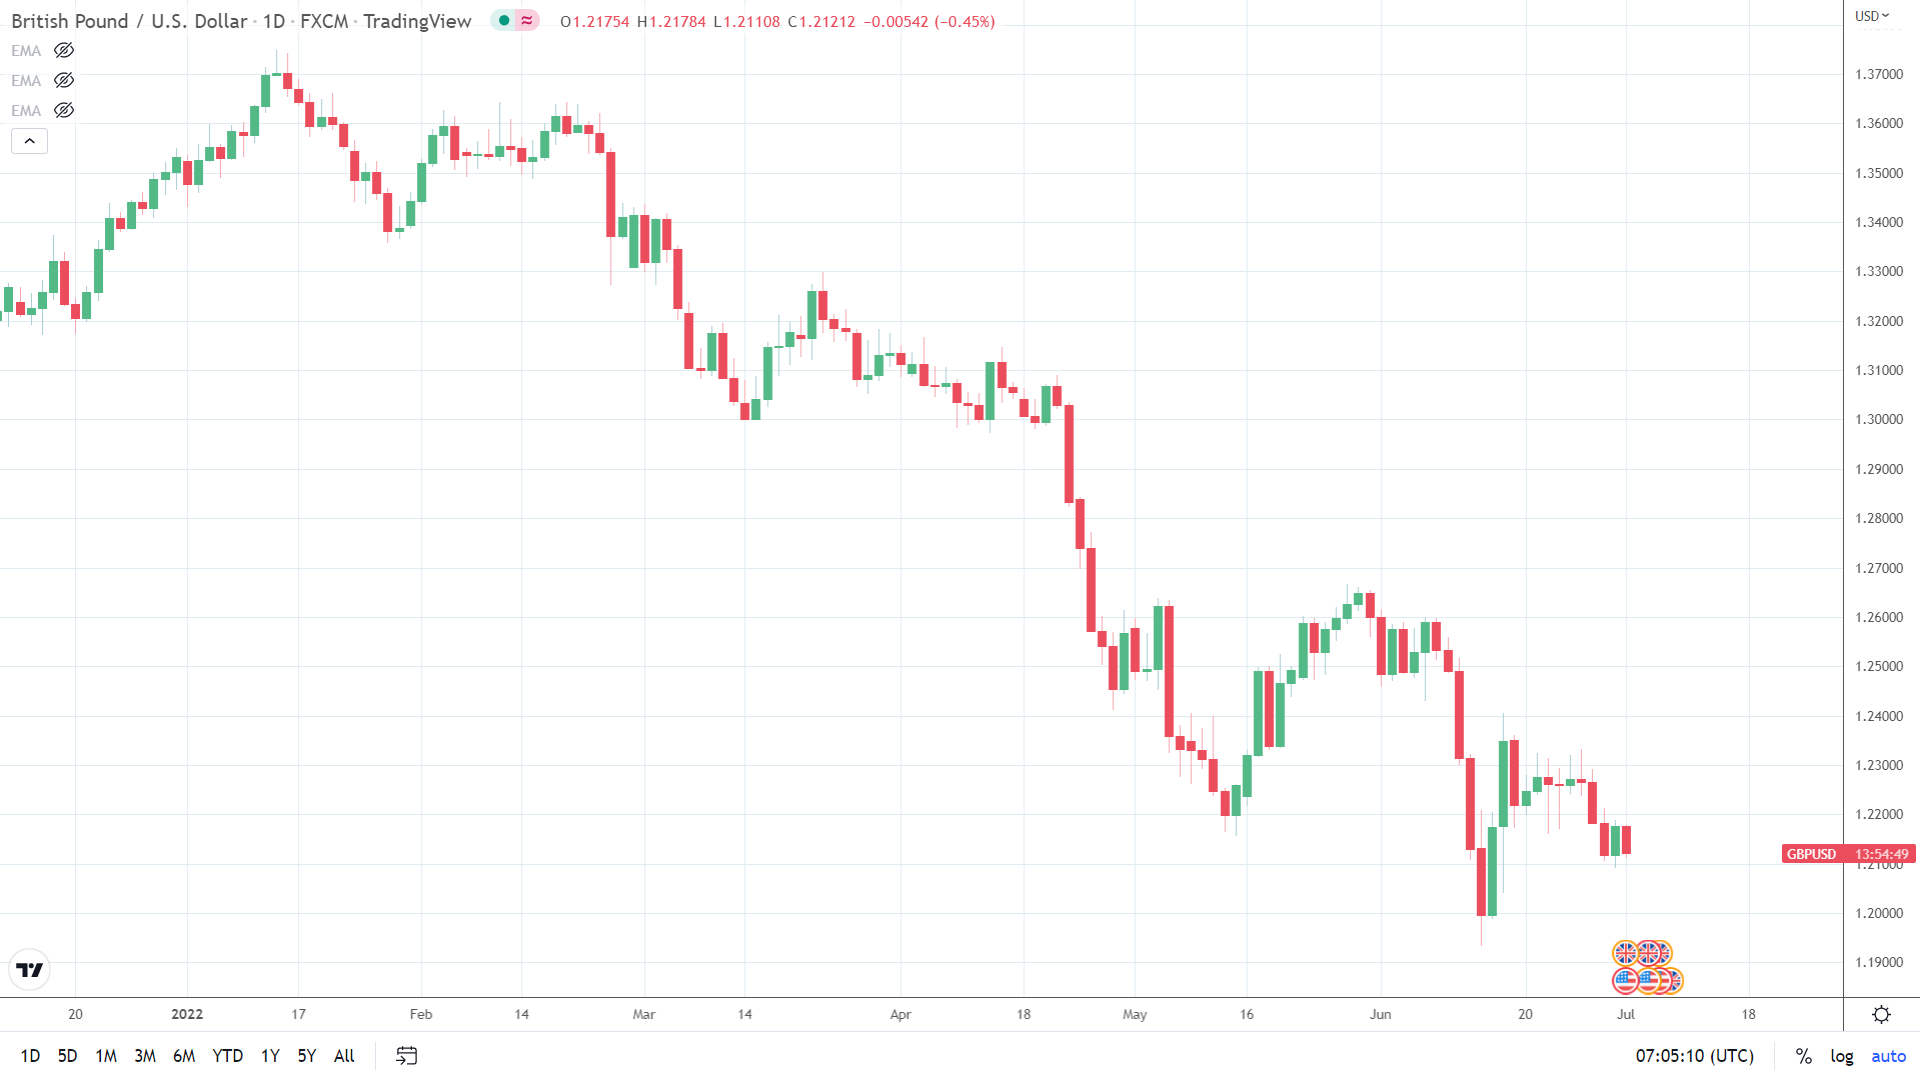 GBP/USD hits reverse